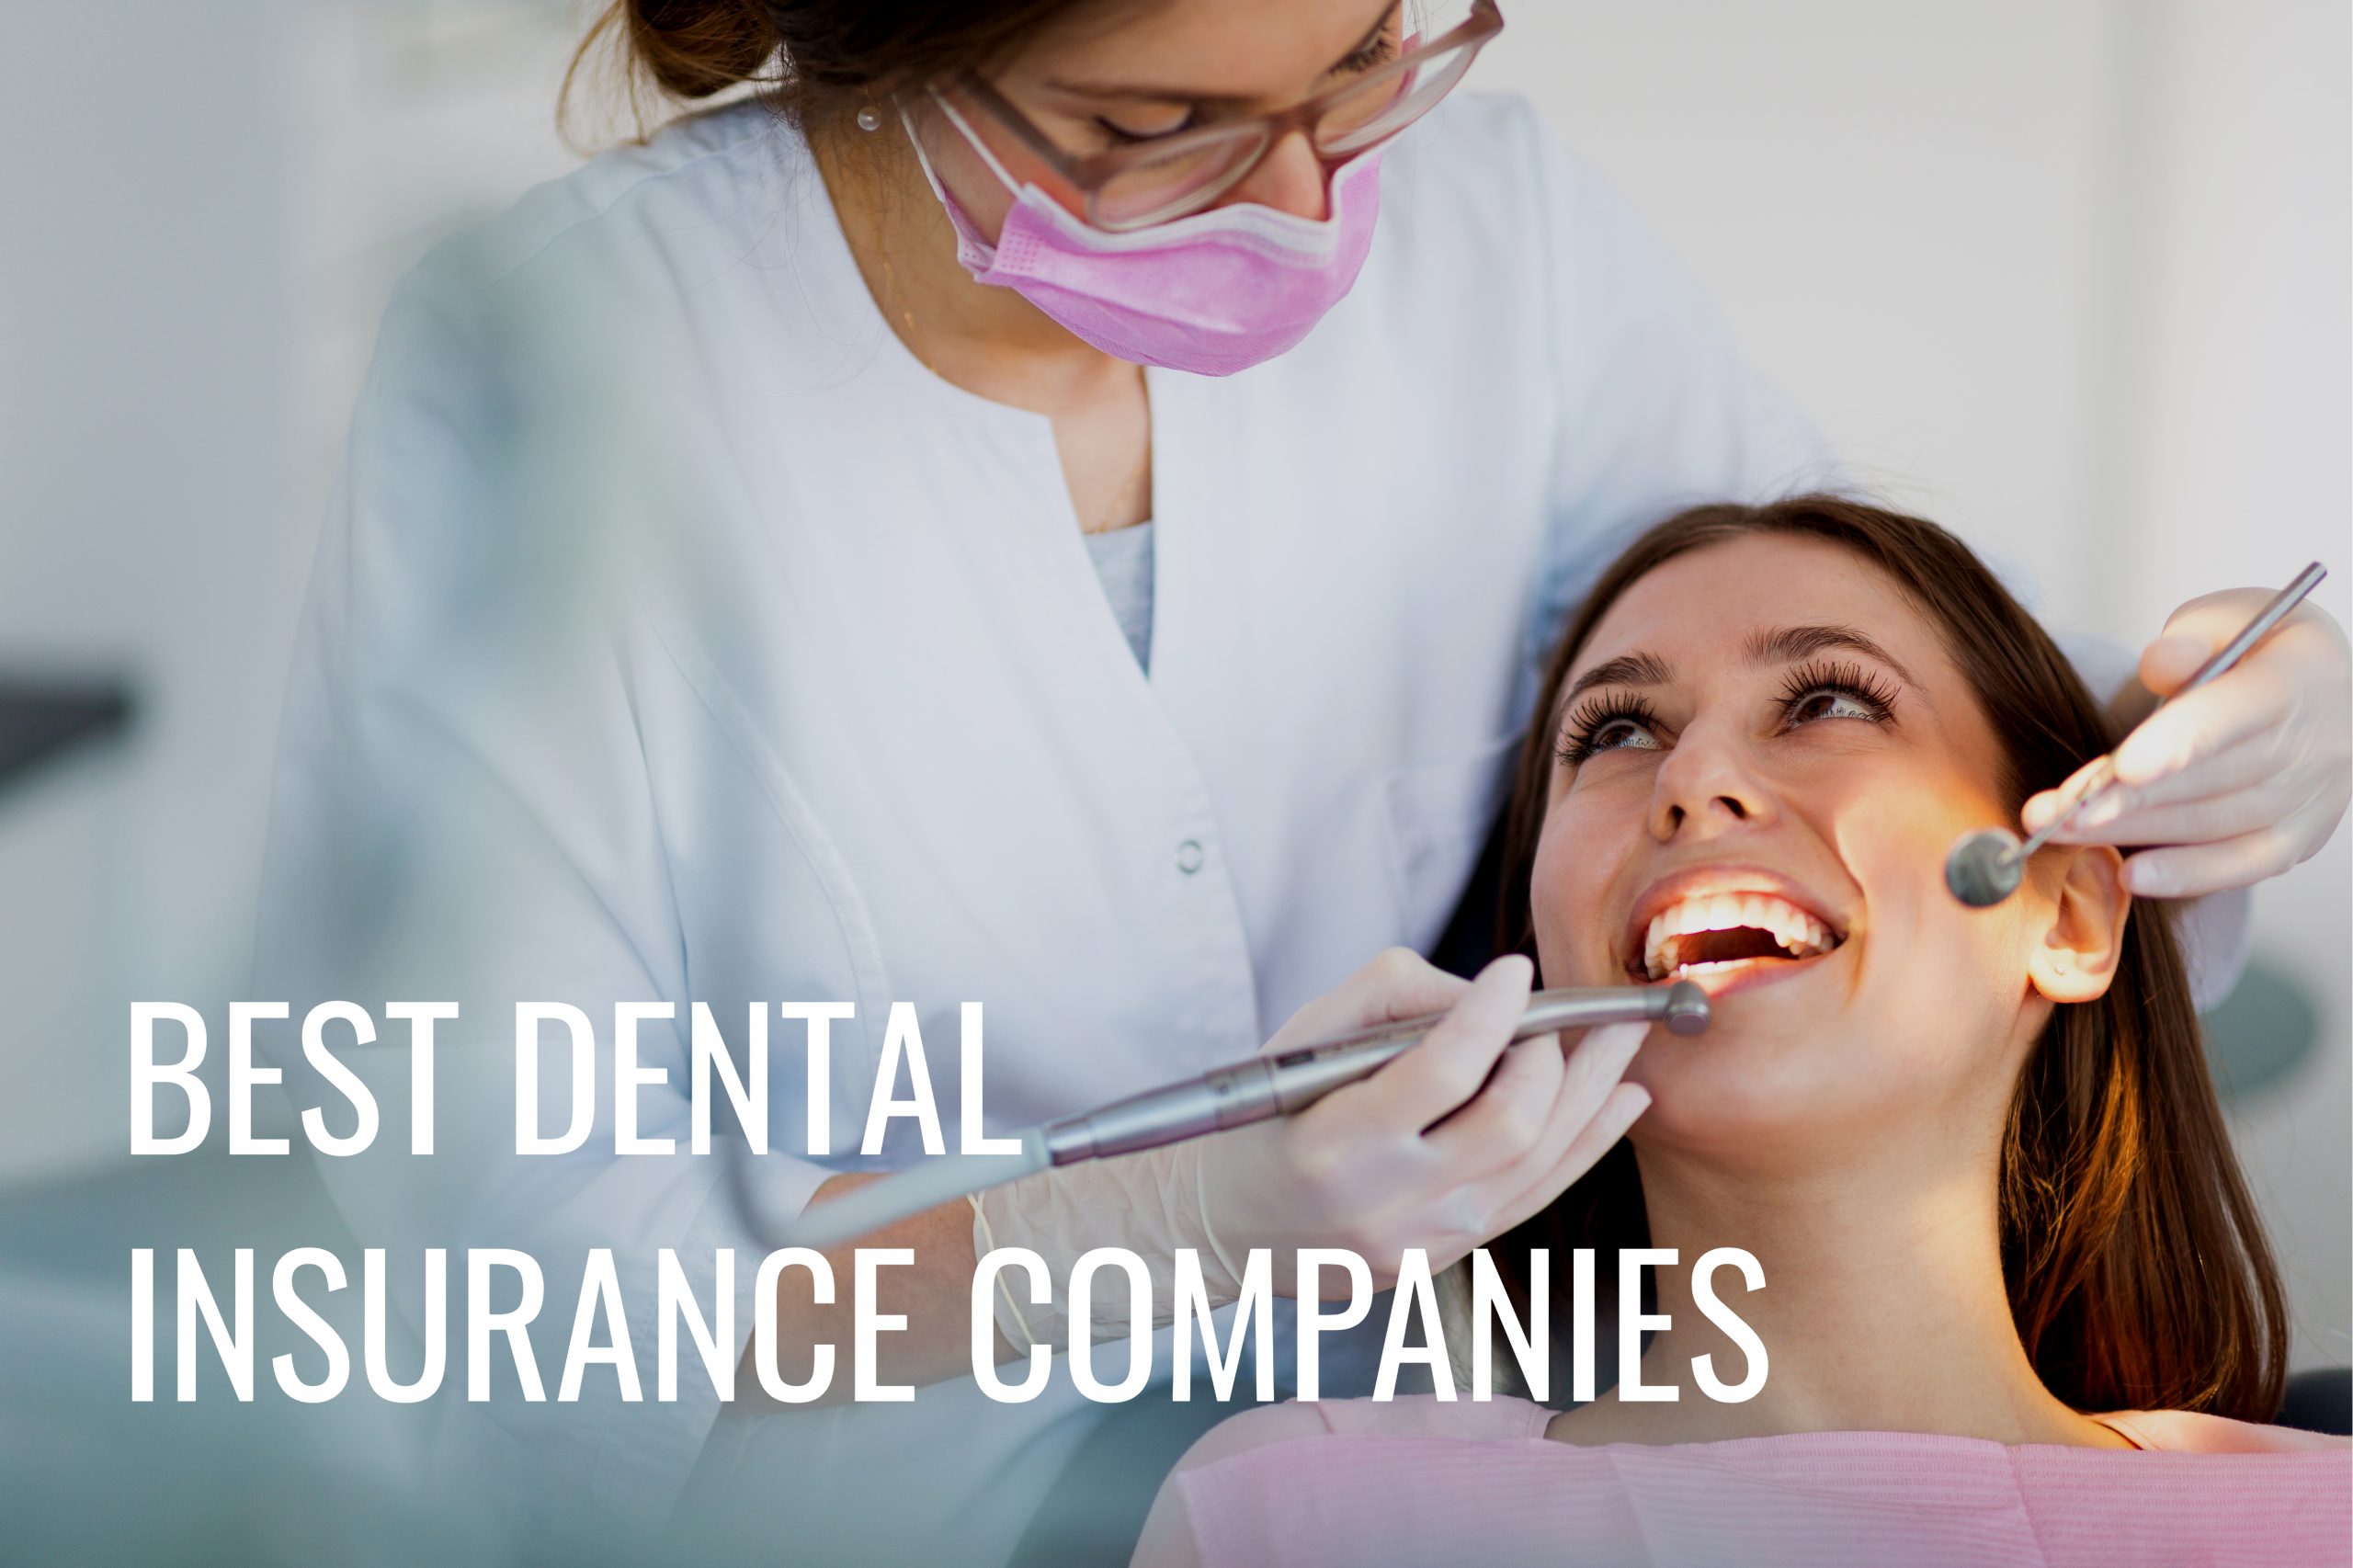 8 Best Dental Insurance Companies 2020  Insurance Blog By Chris